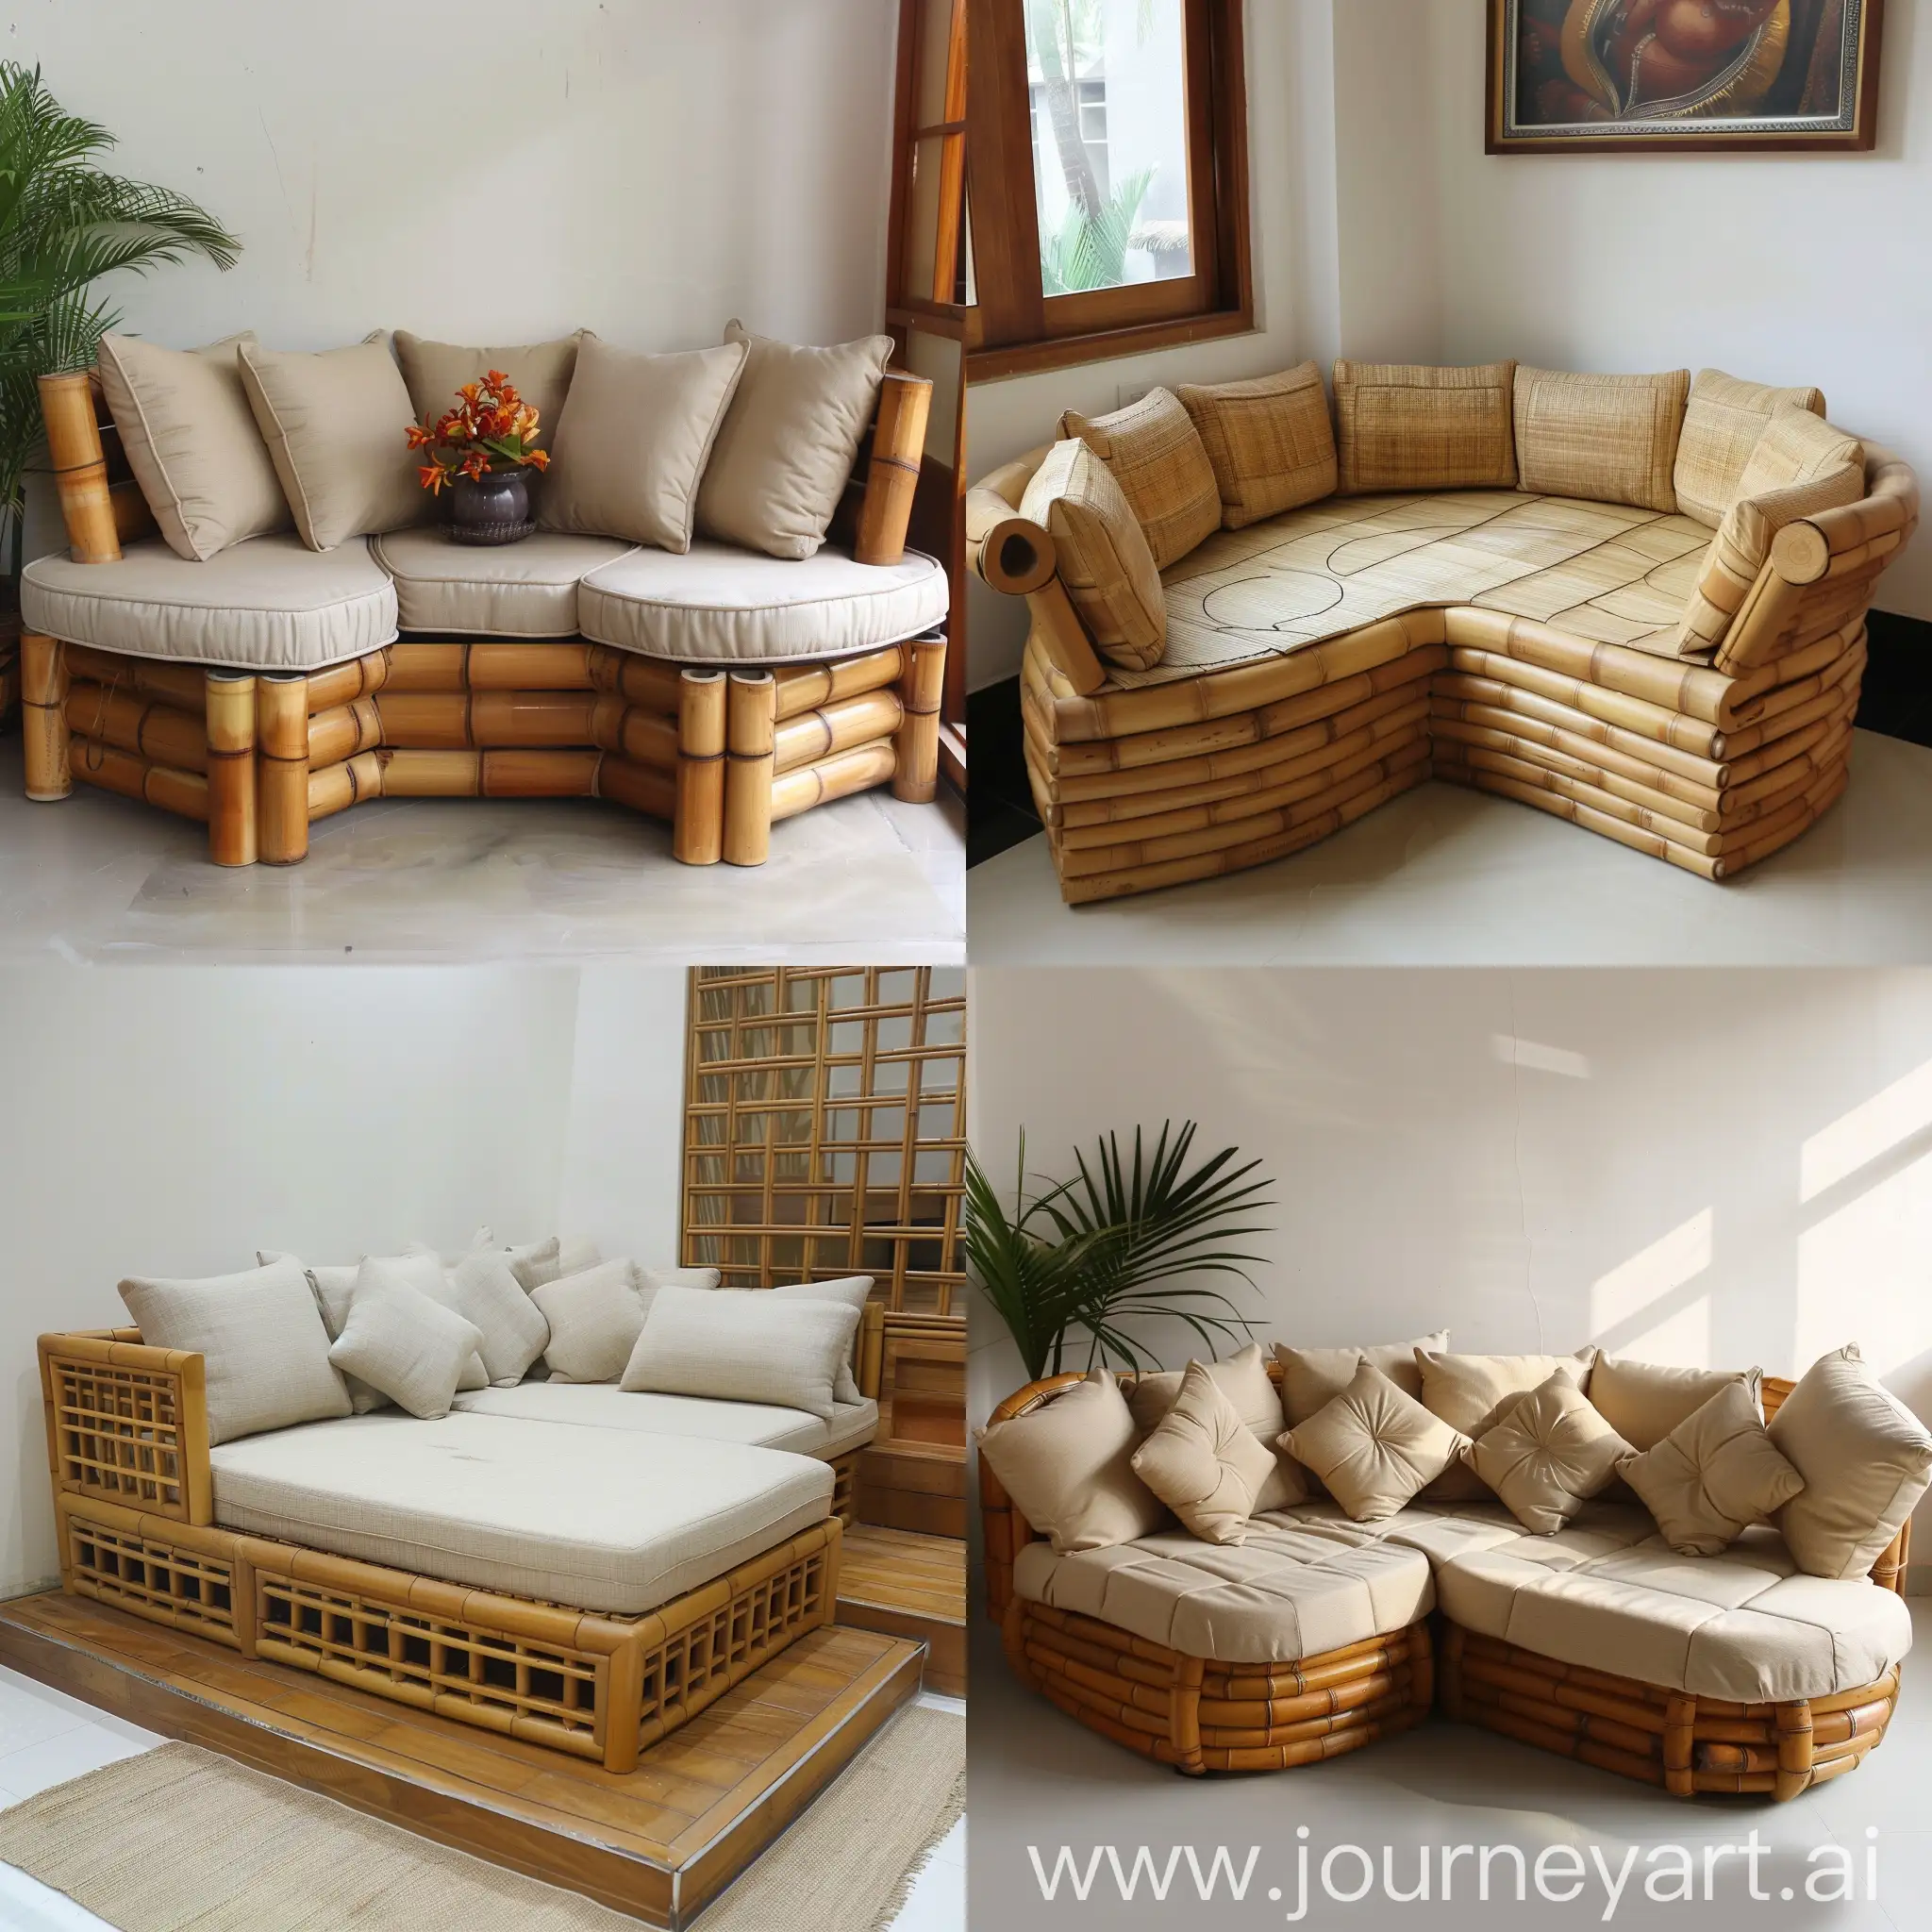 Desain sofa bambu ubtuk sudut rumah